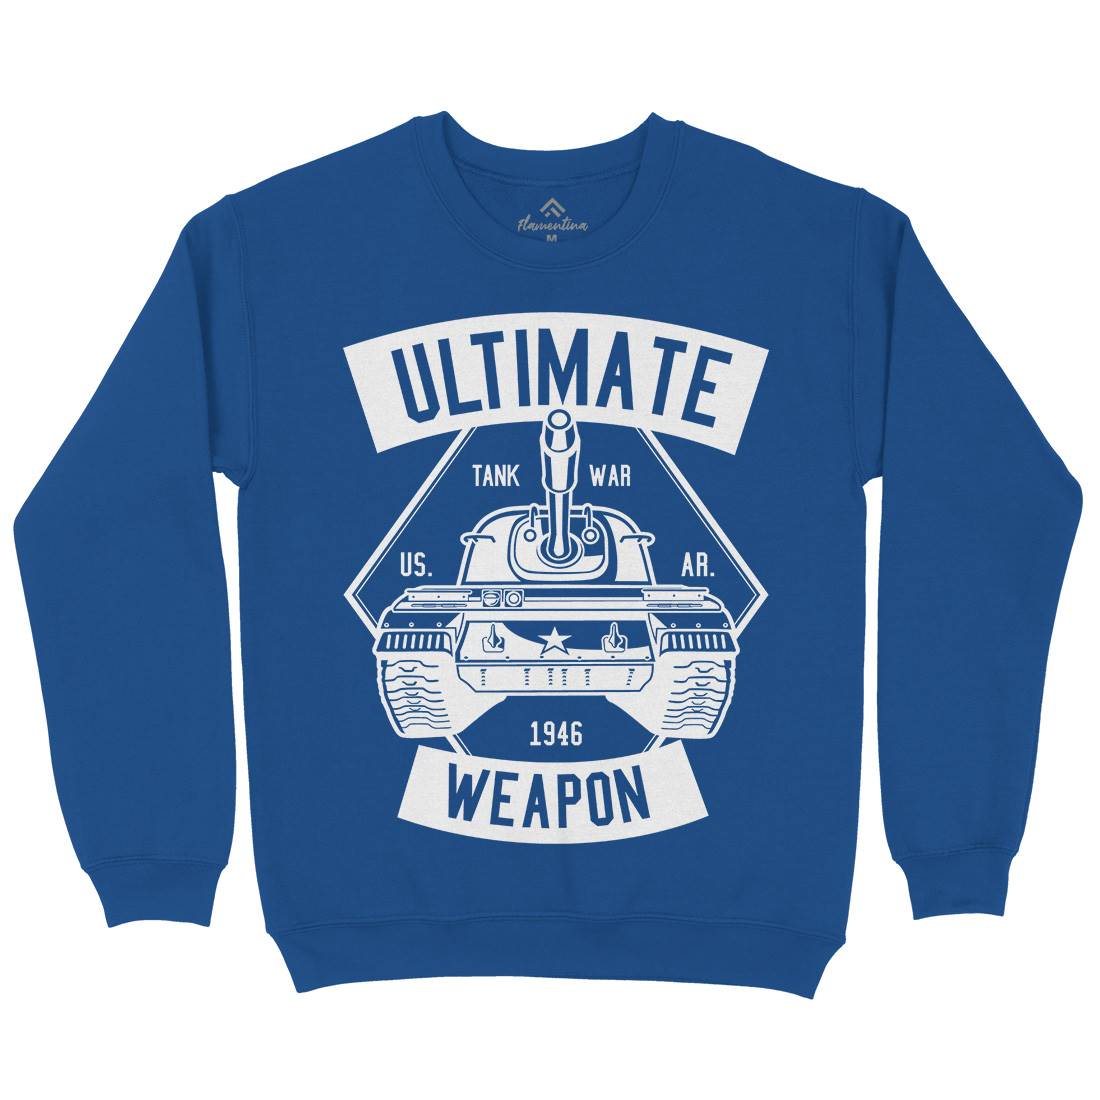 Tank War Ultimate Weapon Mens Crew Neck Sweatshirt Army B649